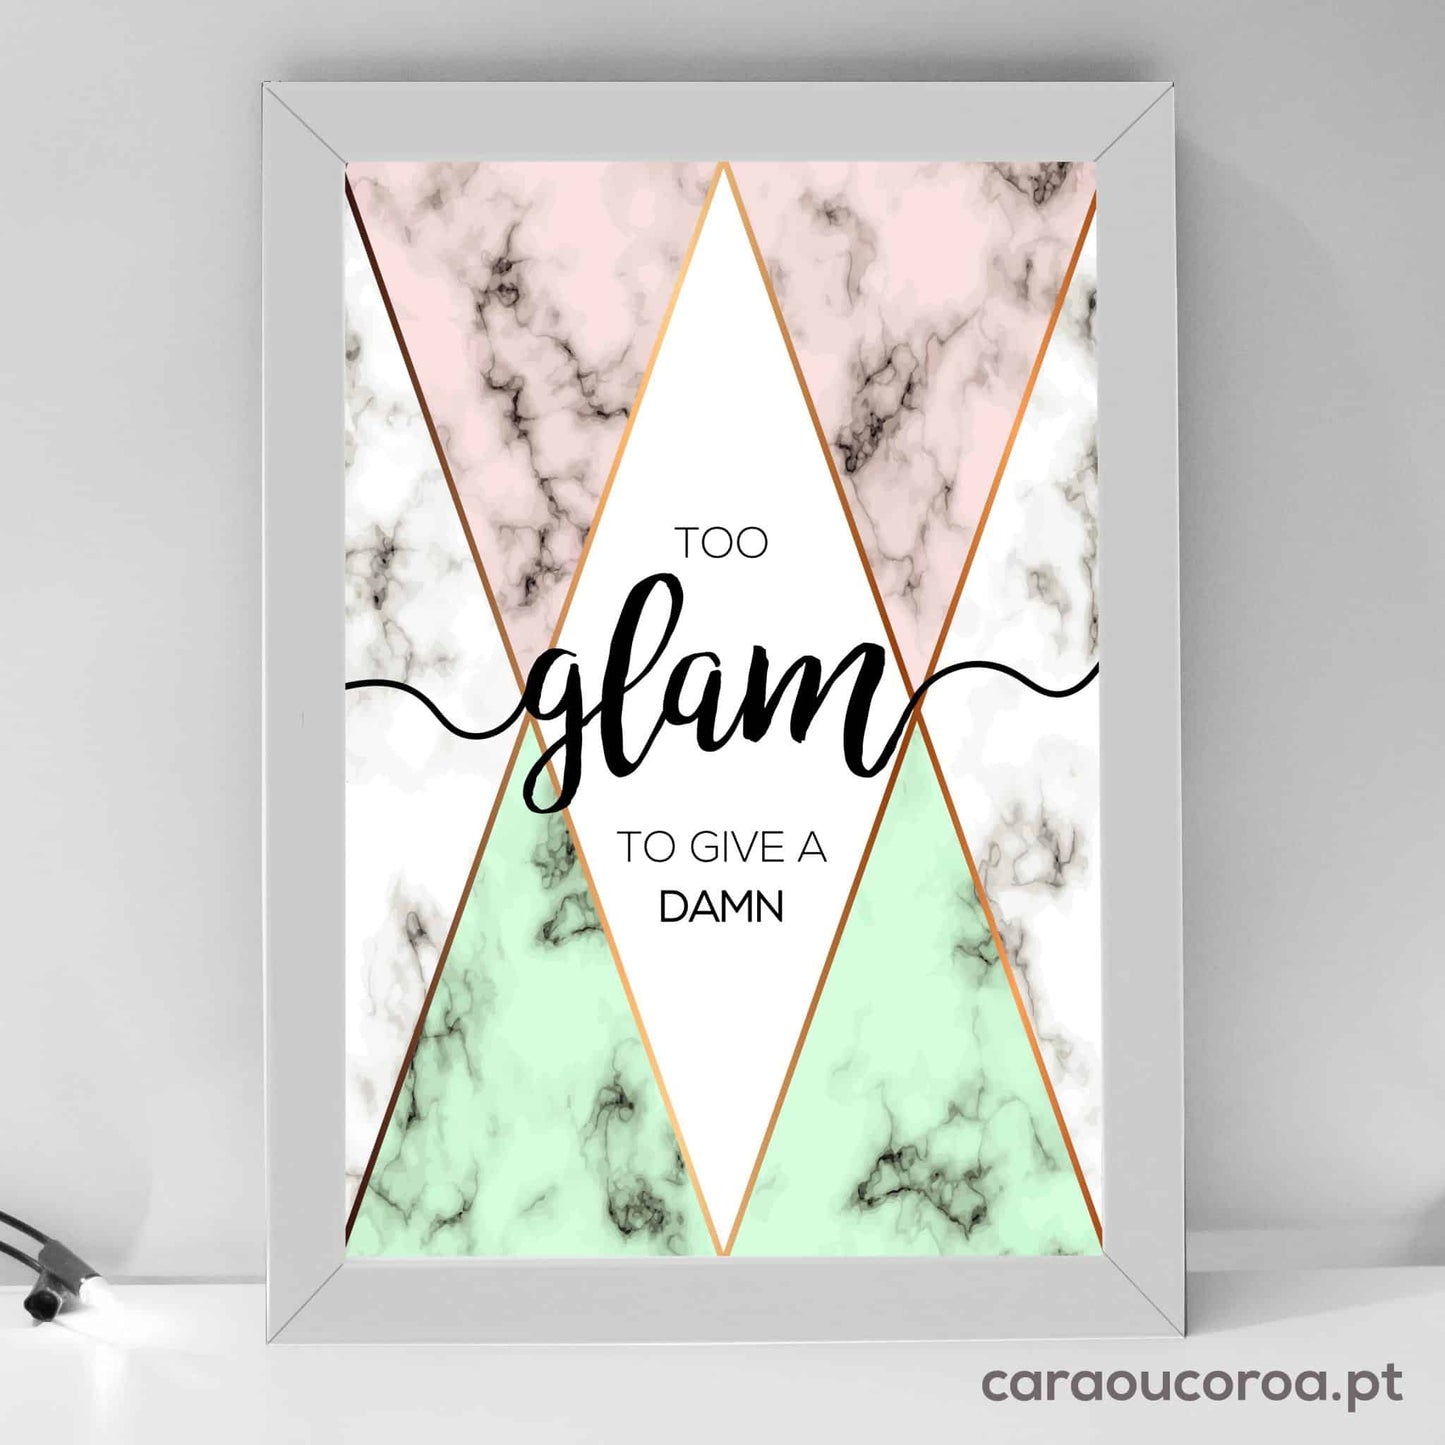 Quadro "Too Glam To Give a Damn" - caraoucoroa.pt